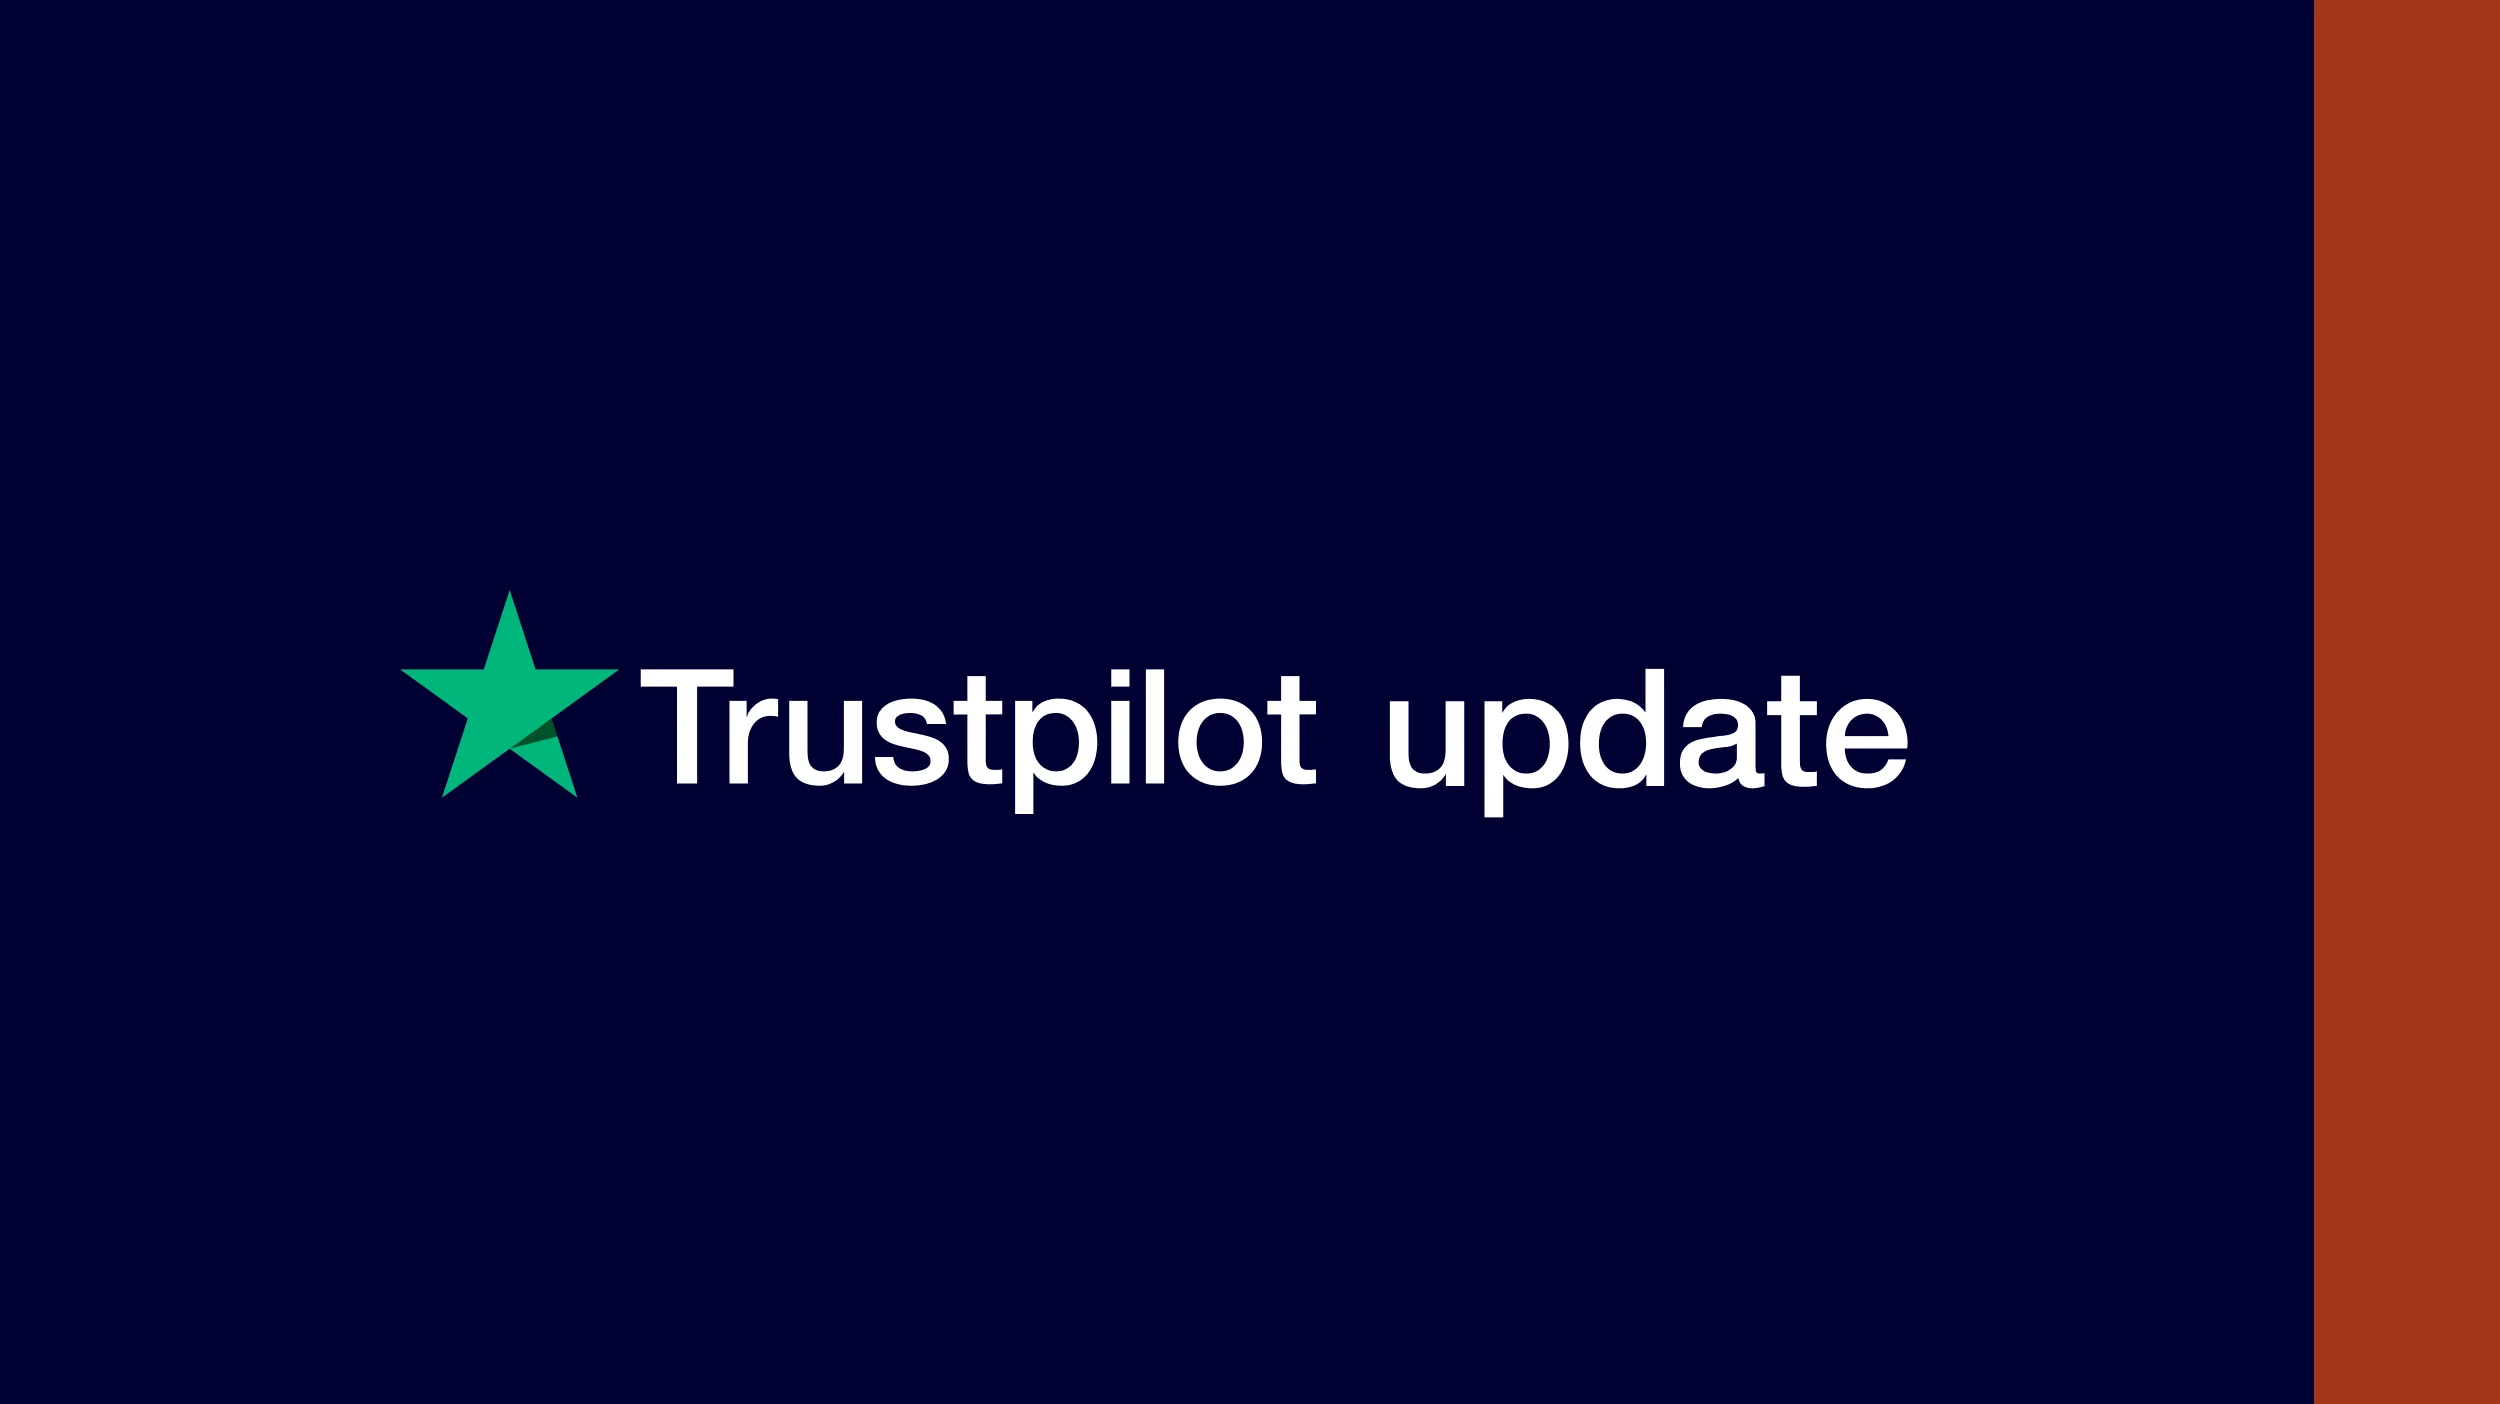 Trustpilot and Klaviyo, partnership announcement